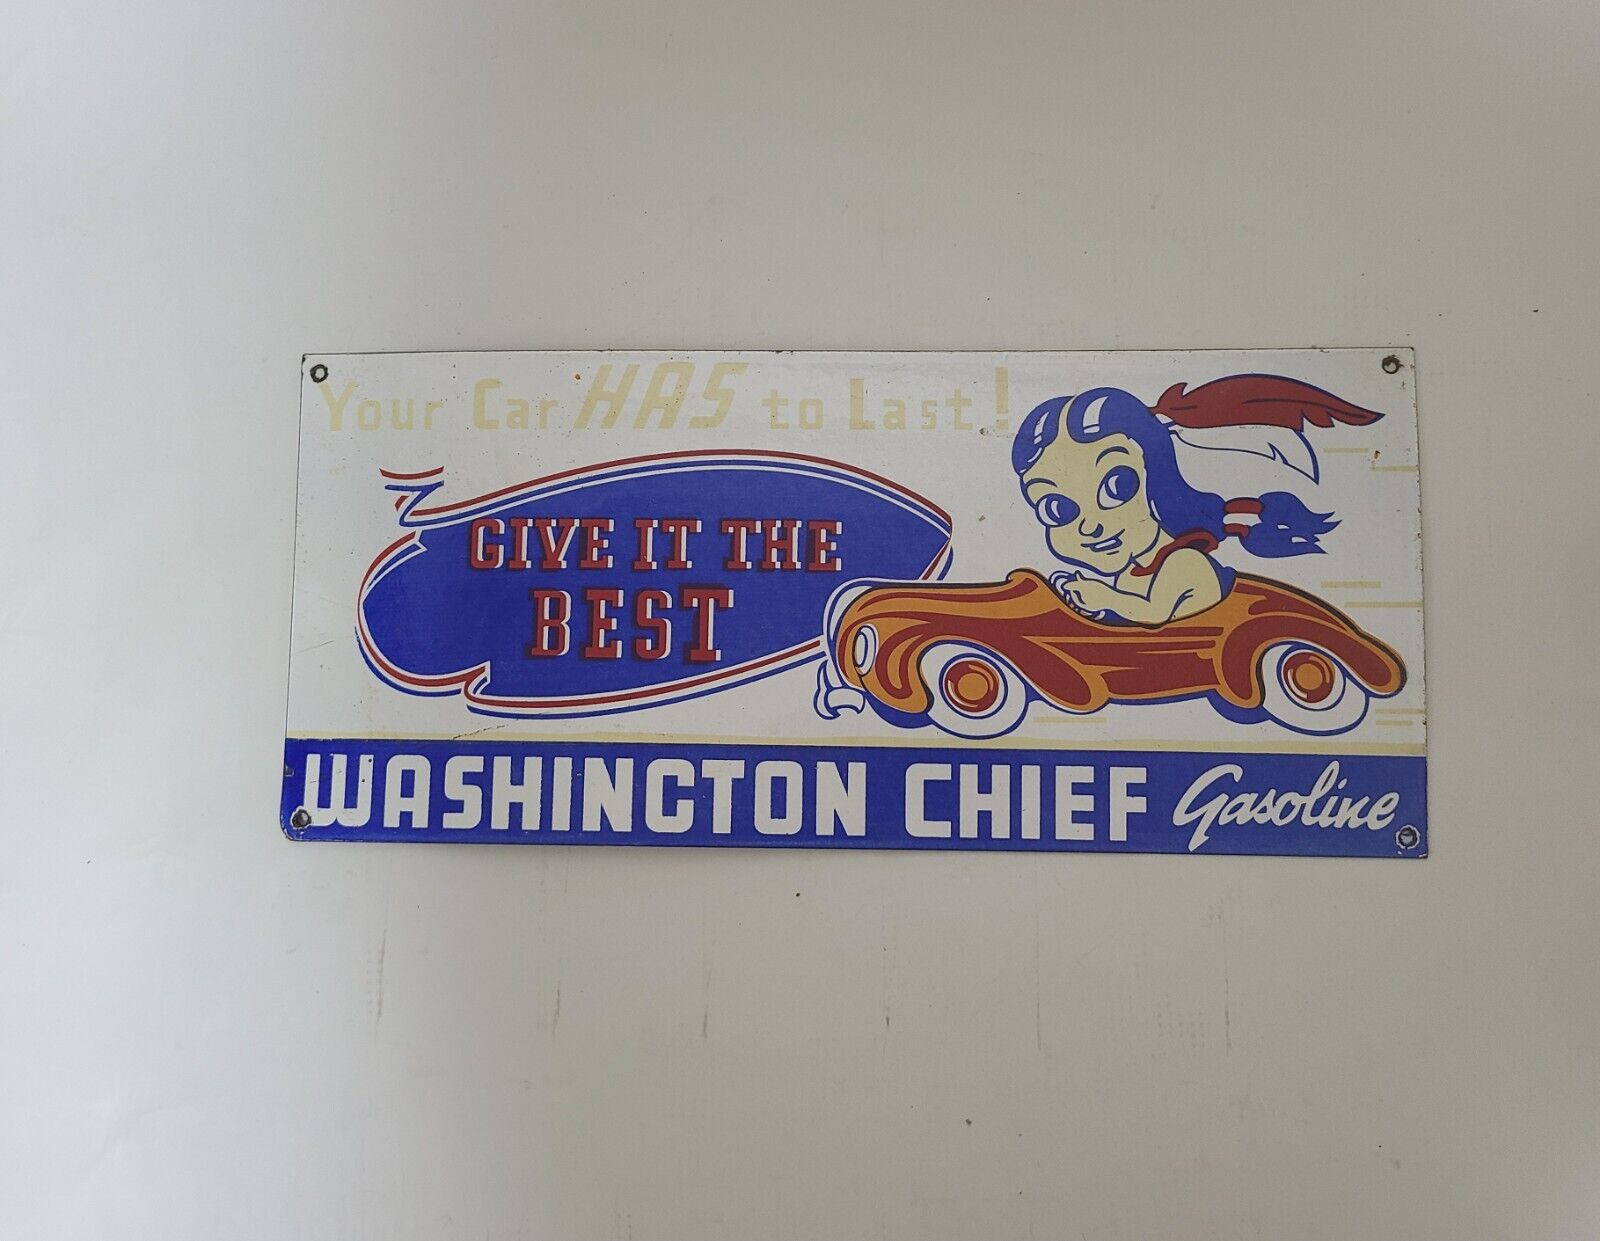  Washington Chief Gasoline Enamel Sign Vintage Advertising Ads 45cm X 20cm 